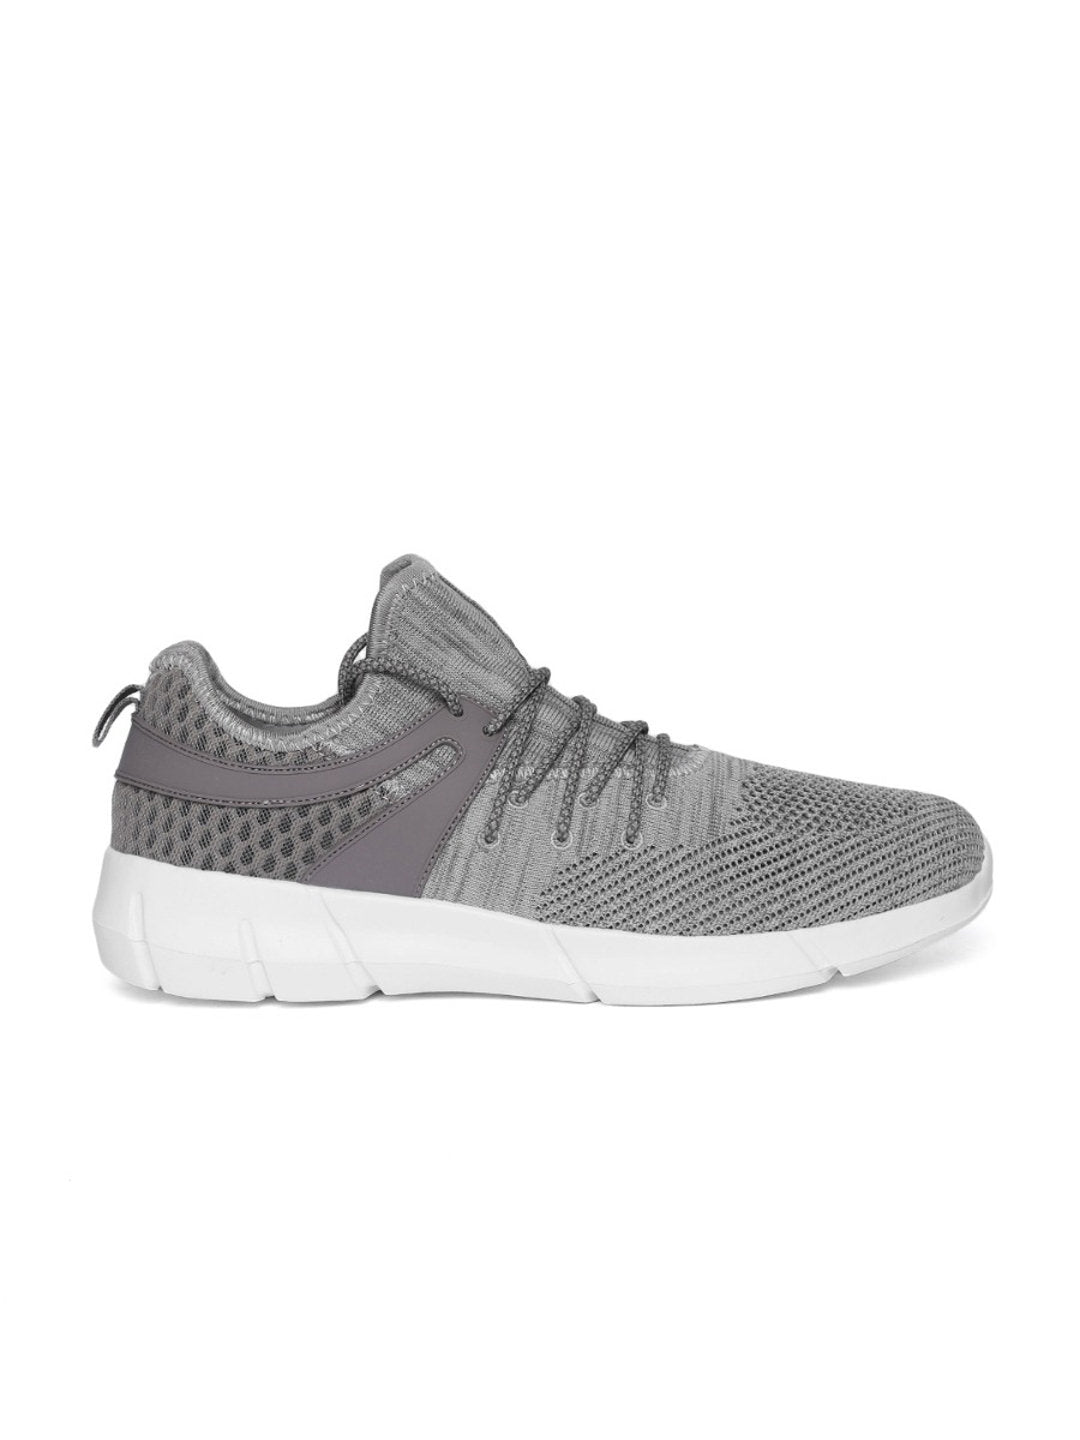 Alcis Mens Grey Training Shoes R8062302-UK-6-Grey